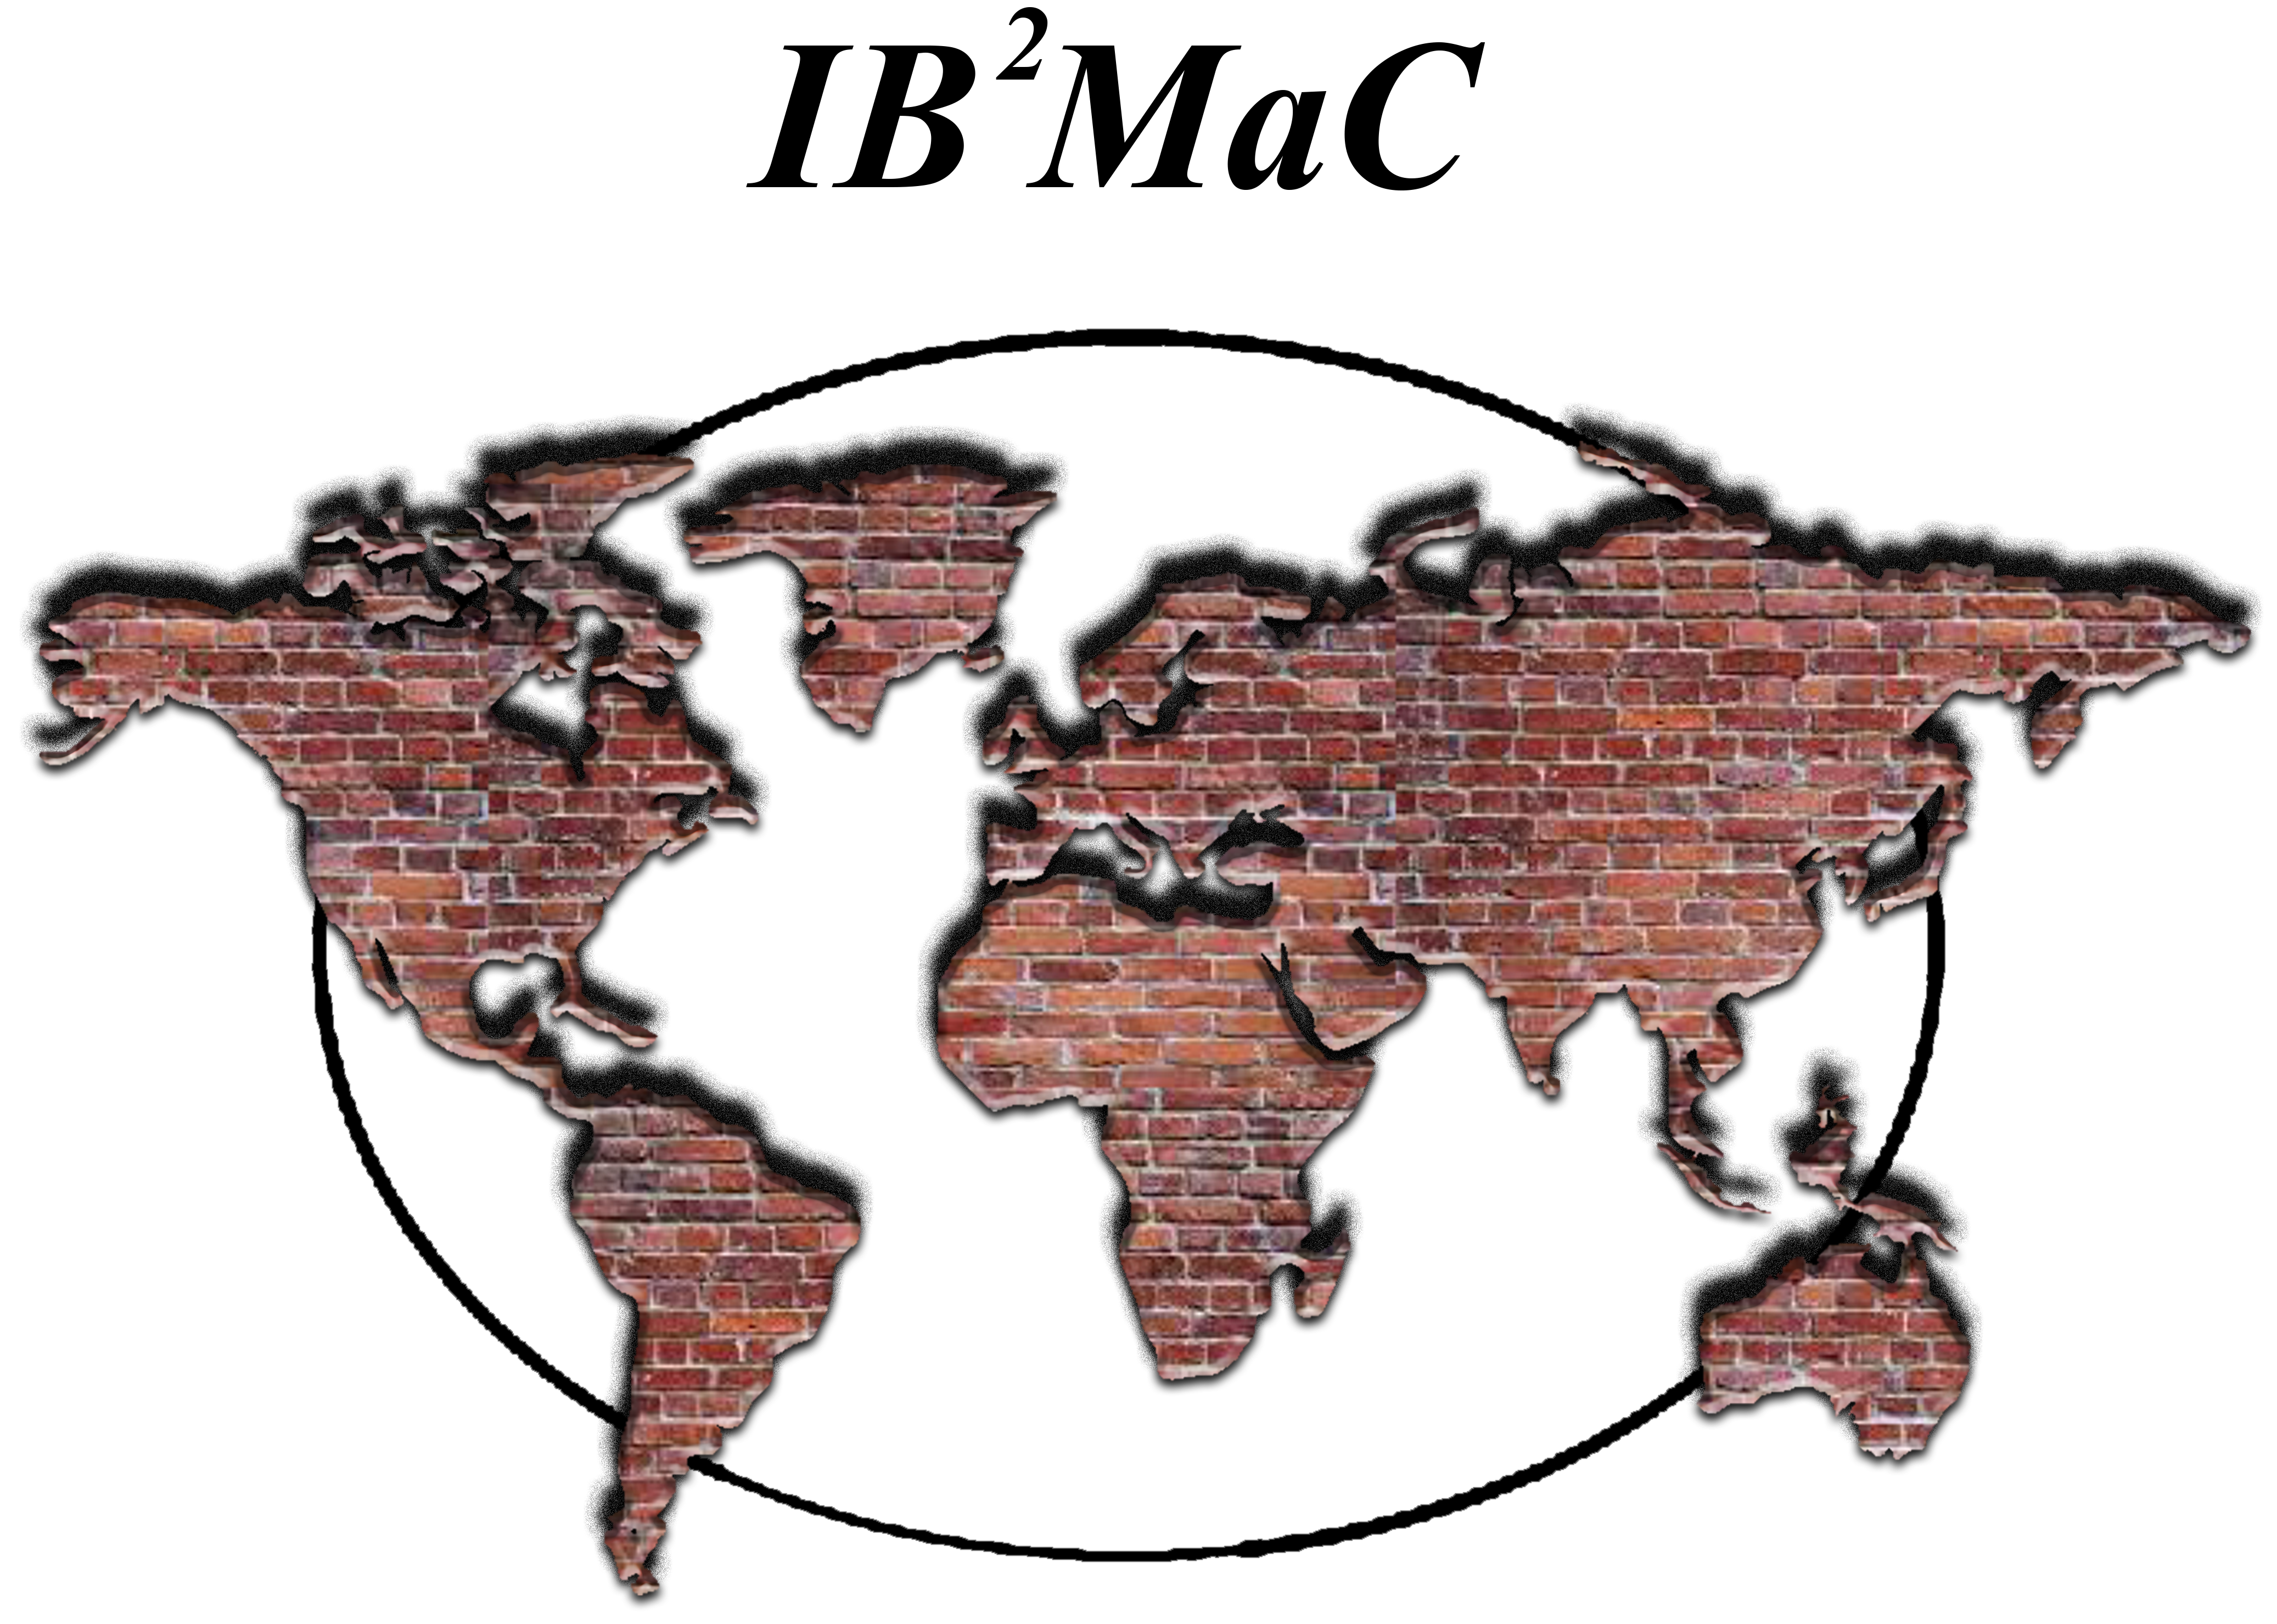 18th International Brick and Block Masonry Conference